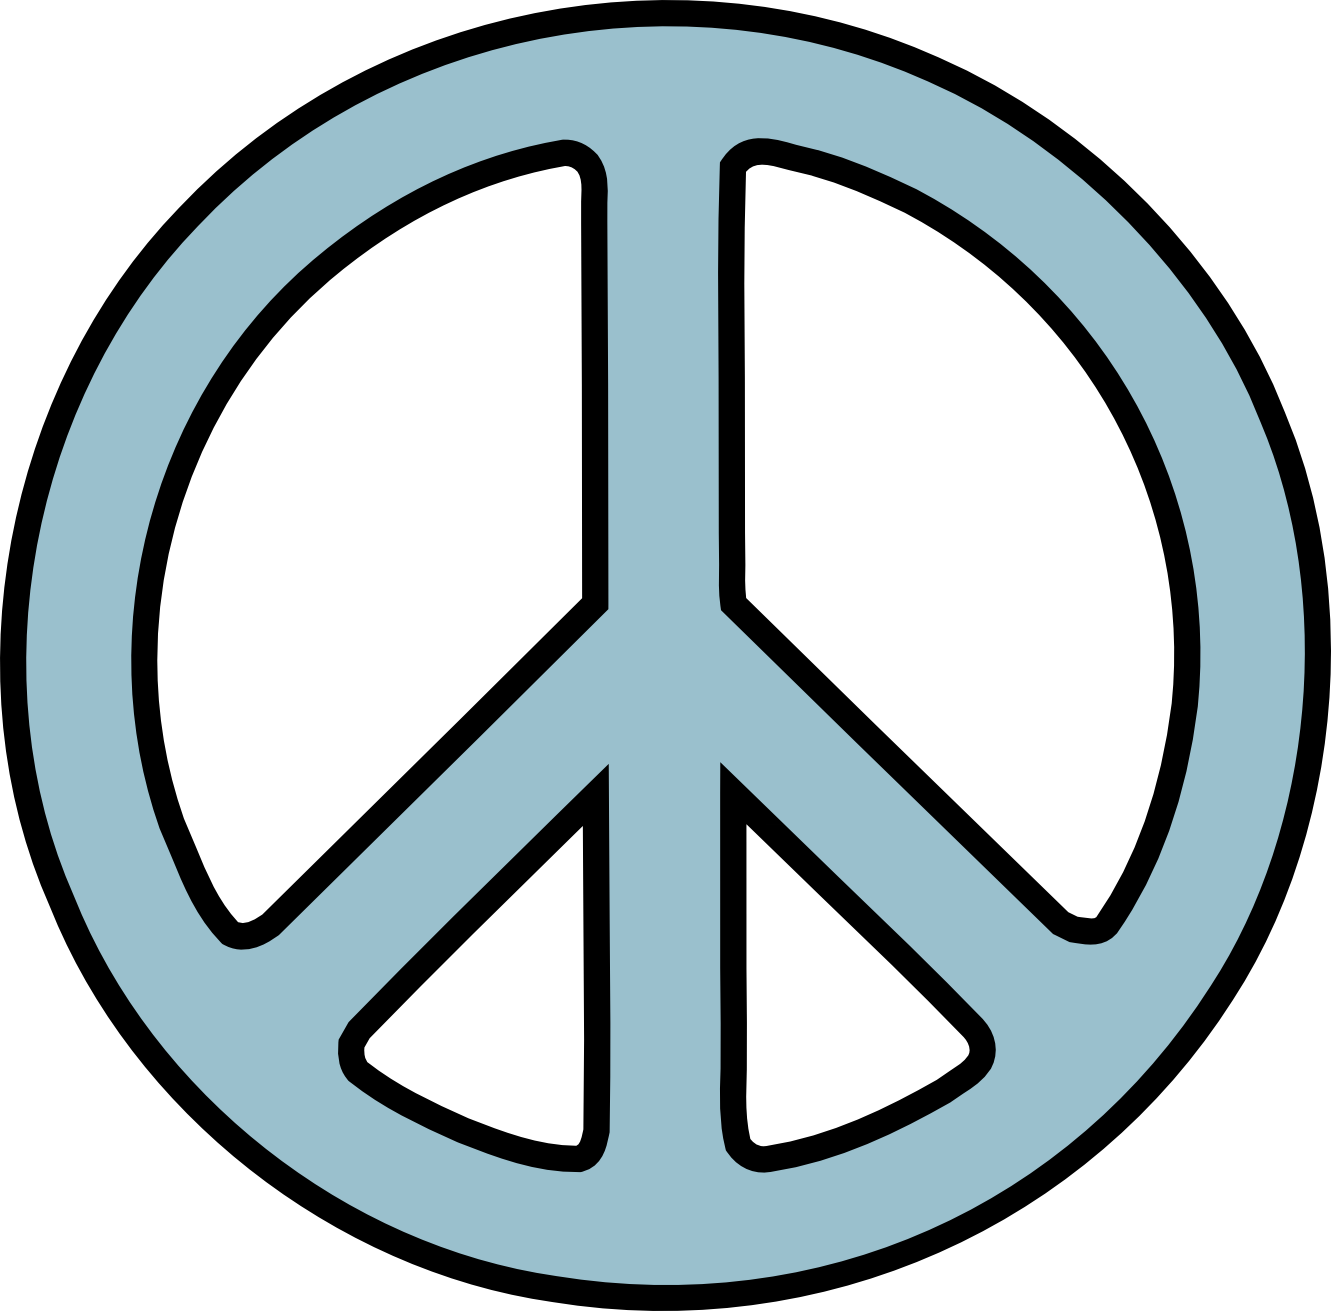 peace clipart peace on earth